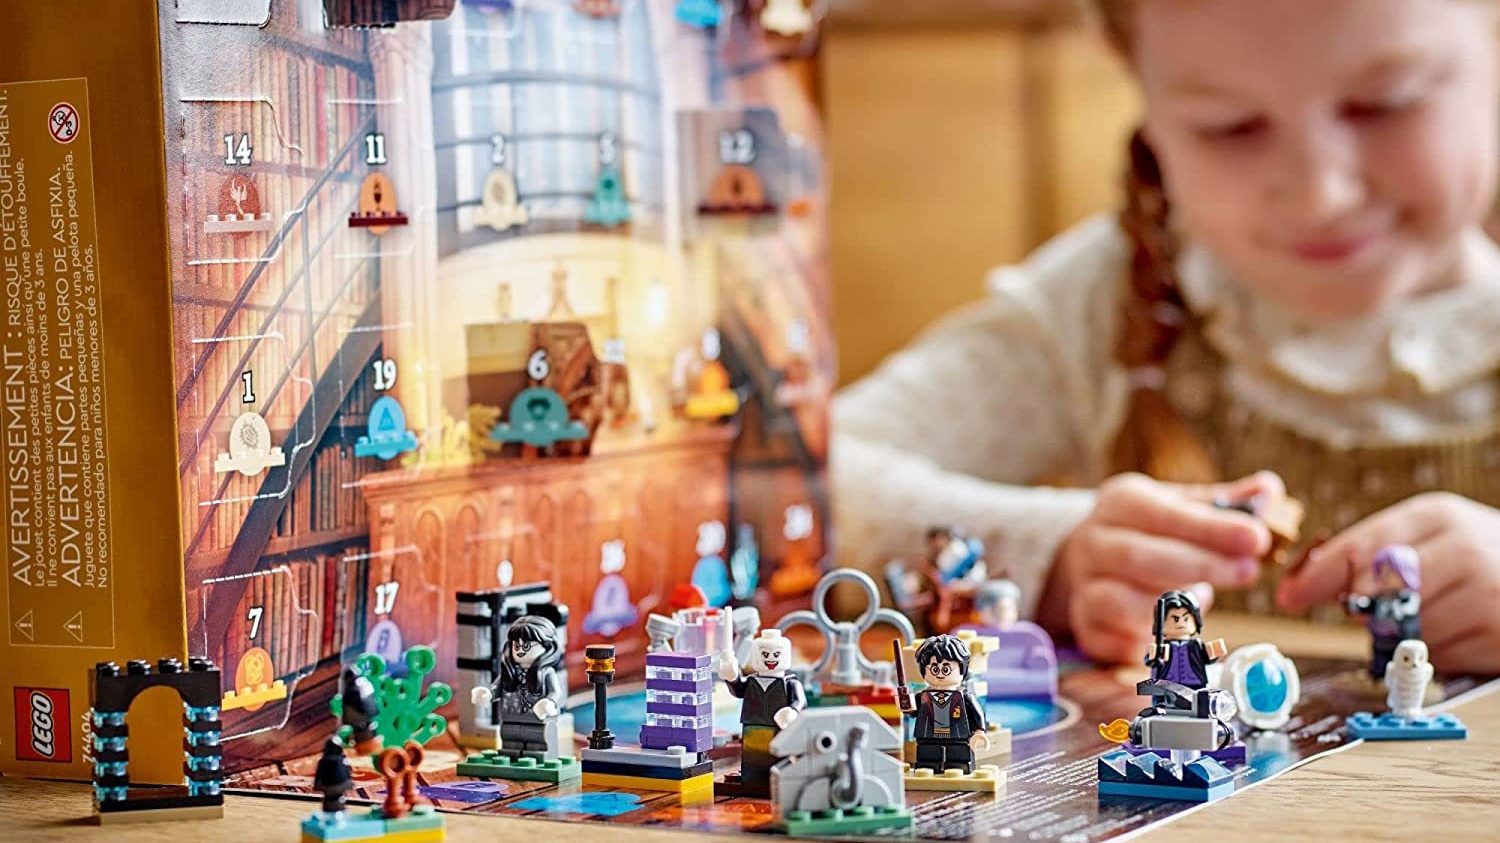 Lego Advent calendar, with figurines